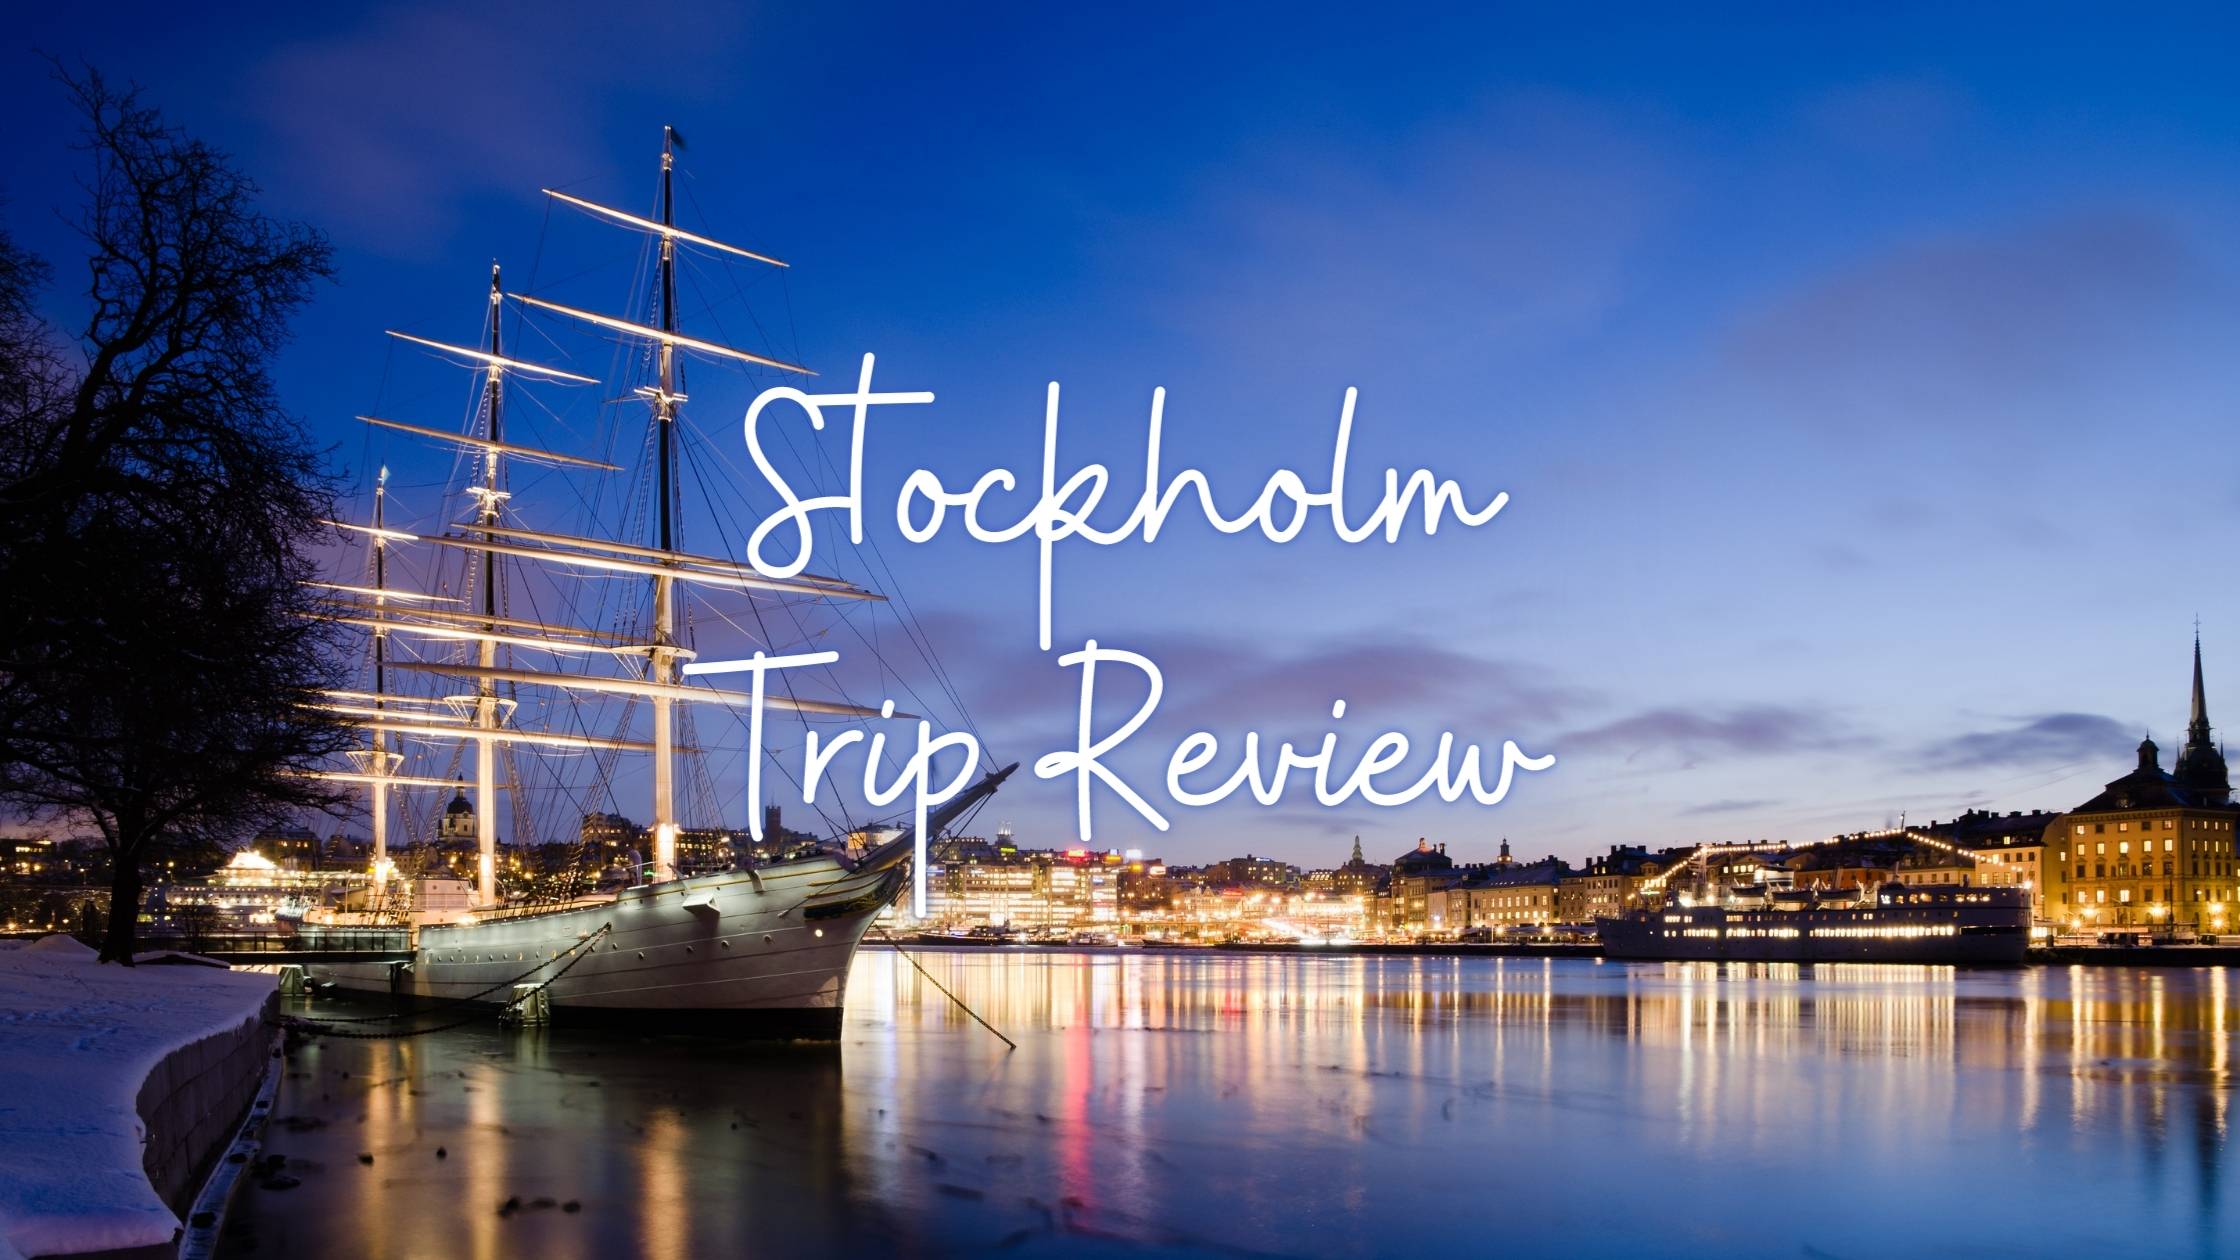 Trip Review: Stockholm